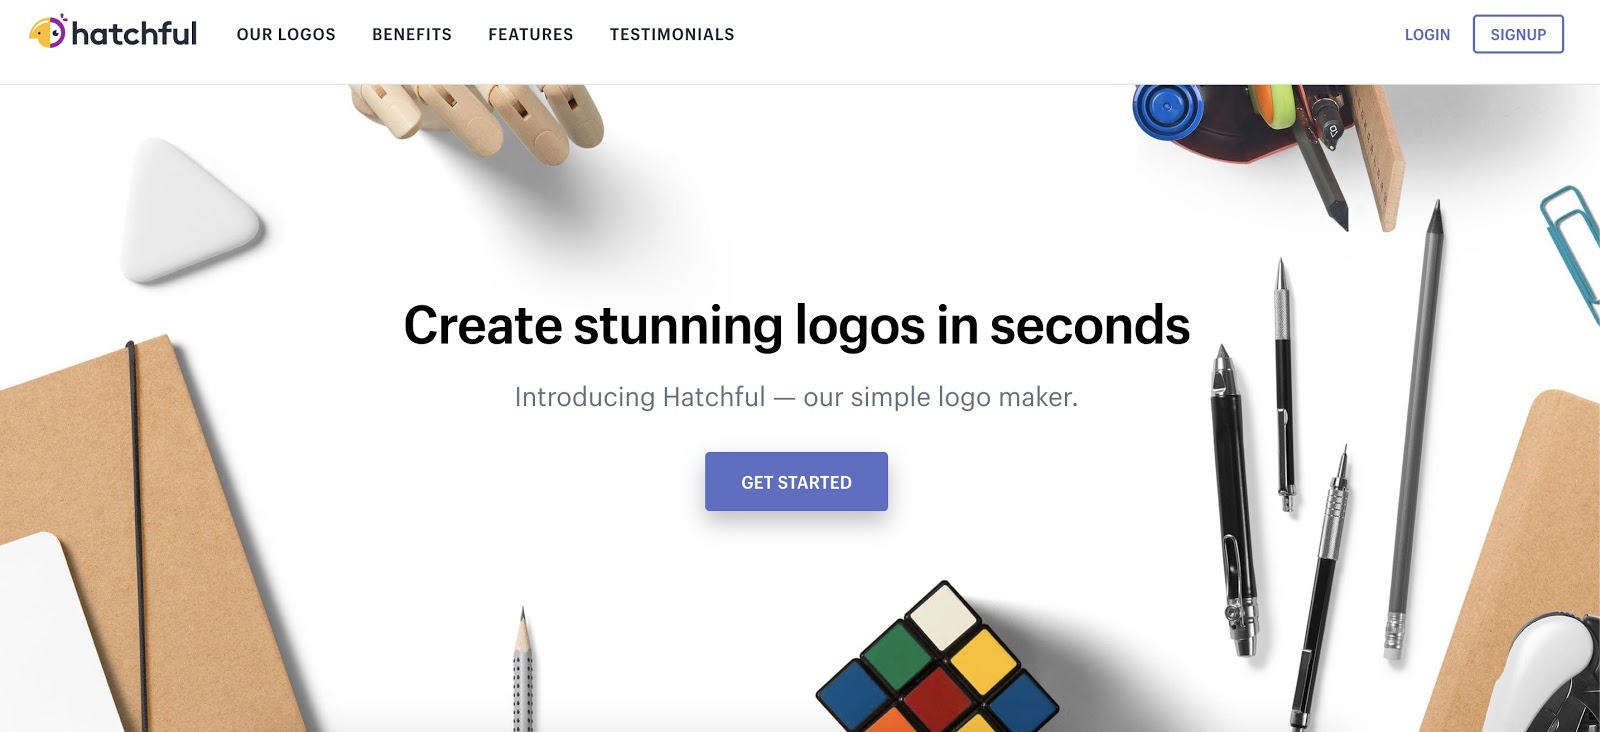 Shopify Hatchful - Free logo maker